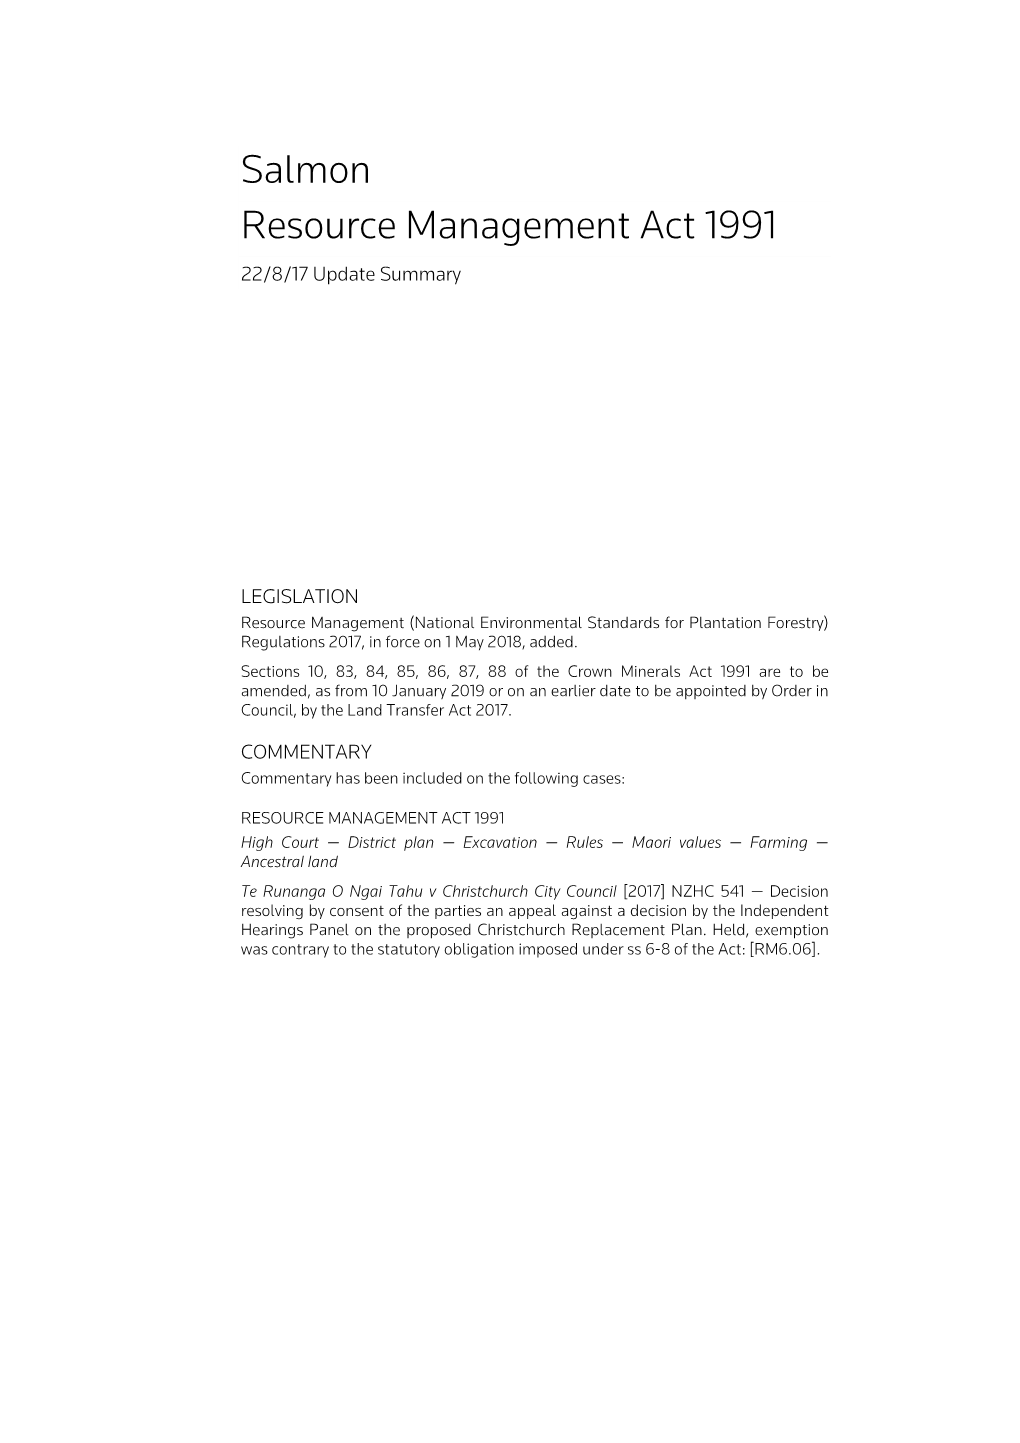 Salmon Resource Management Act 1991 22/8/17 Update Summary